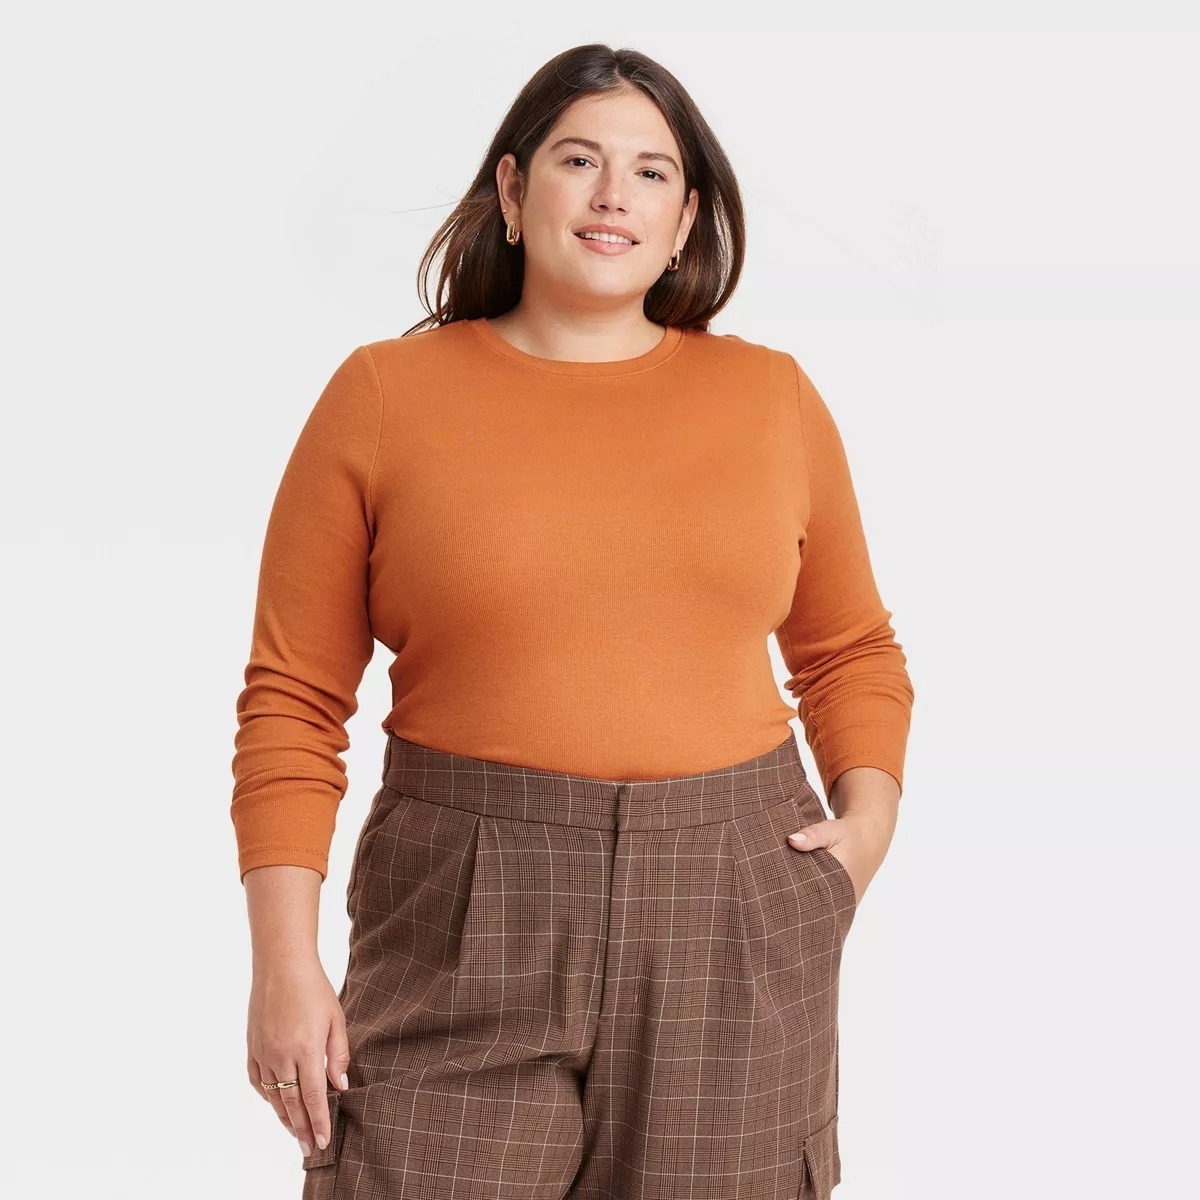 orange crewneck sweater on model